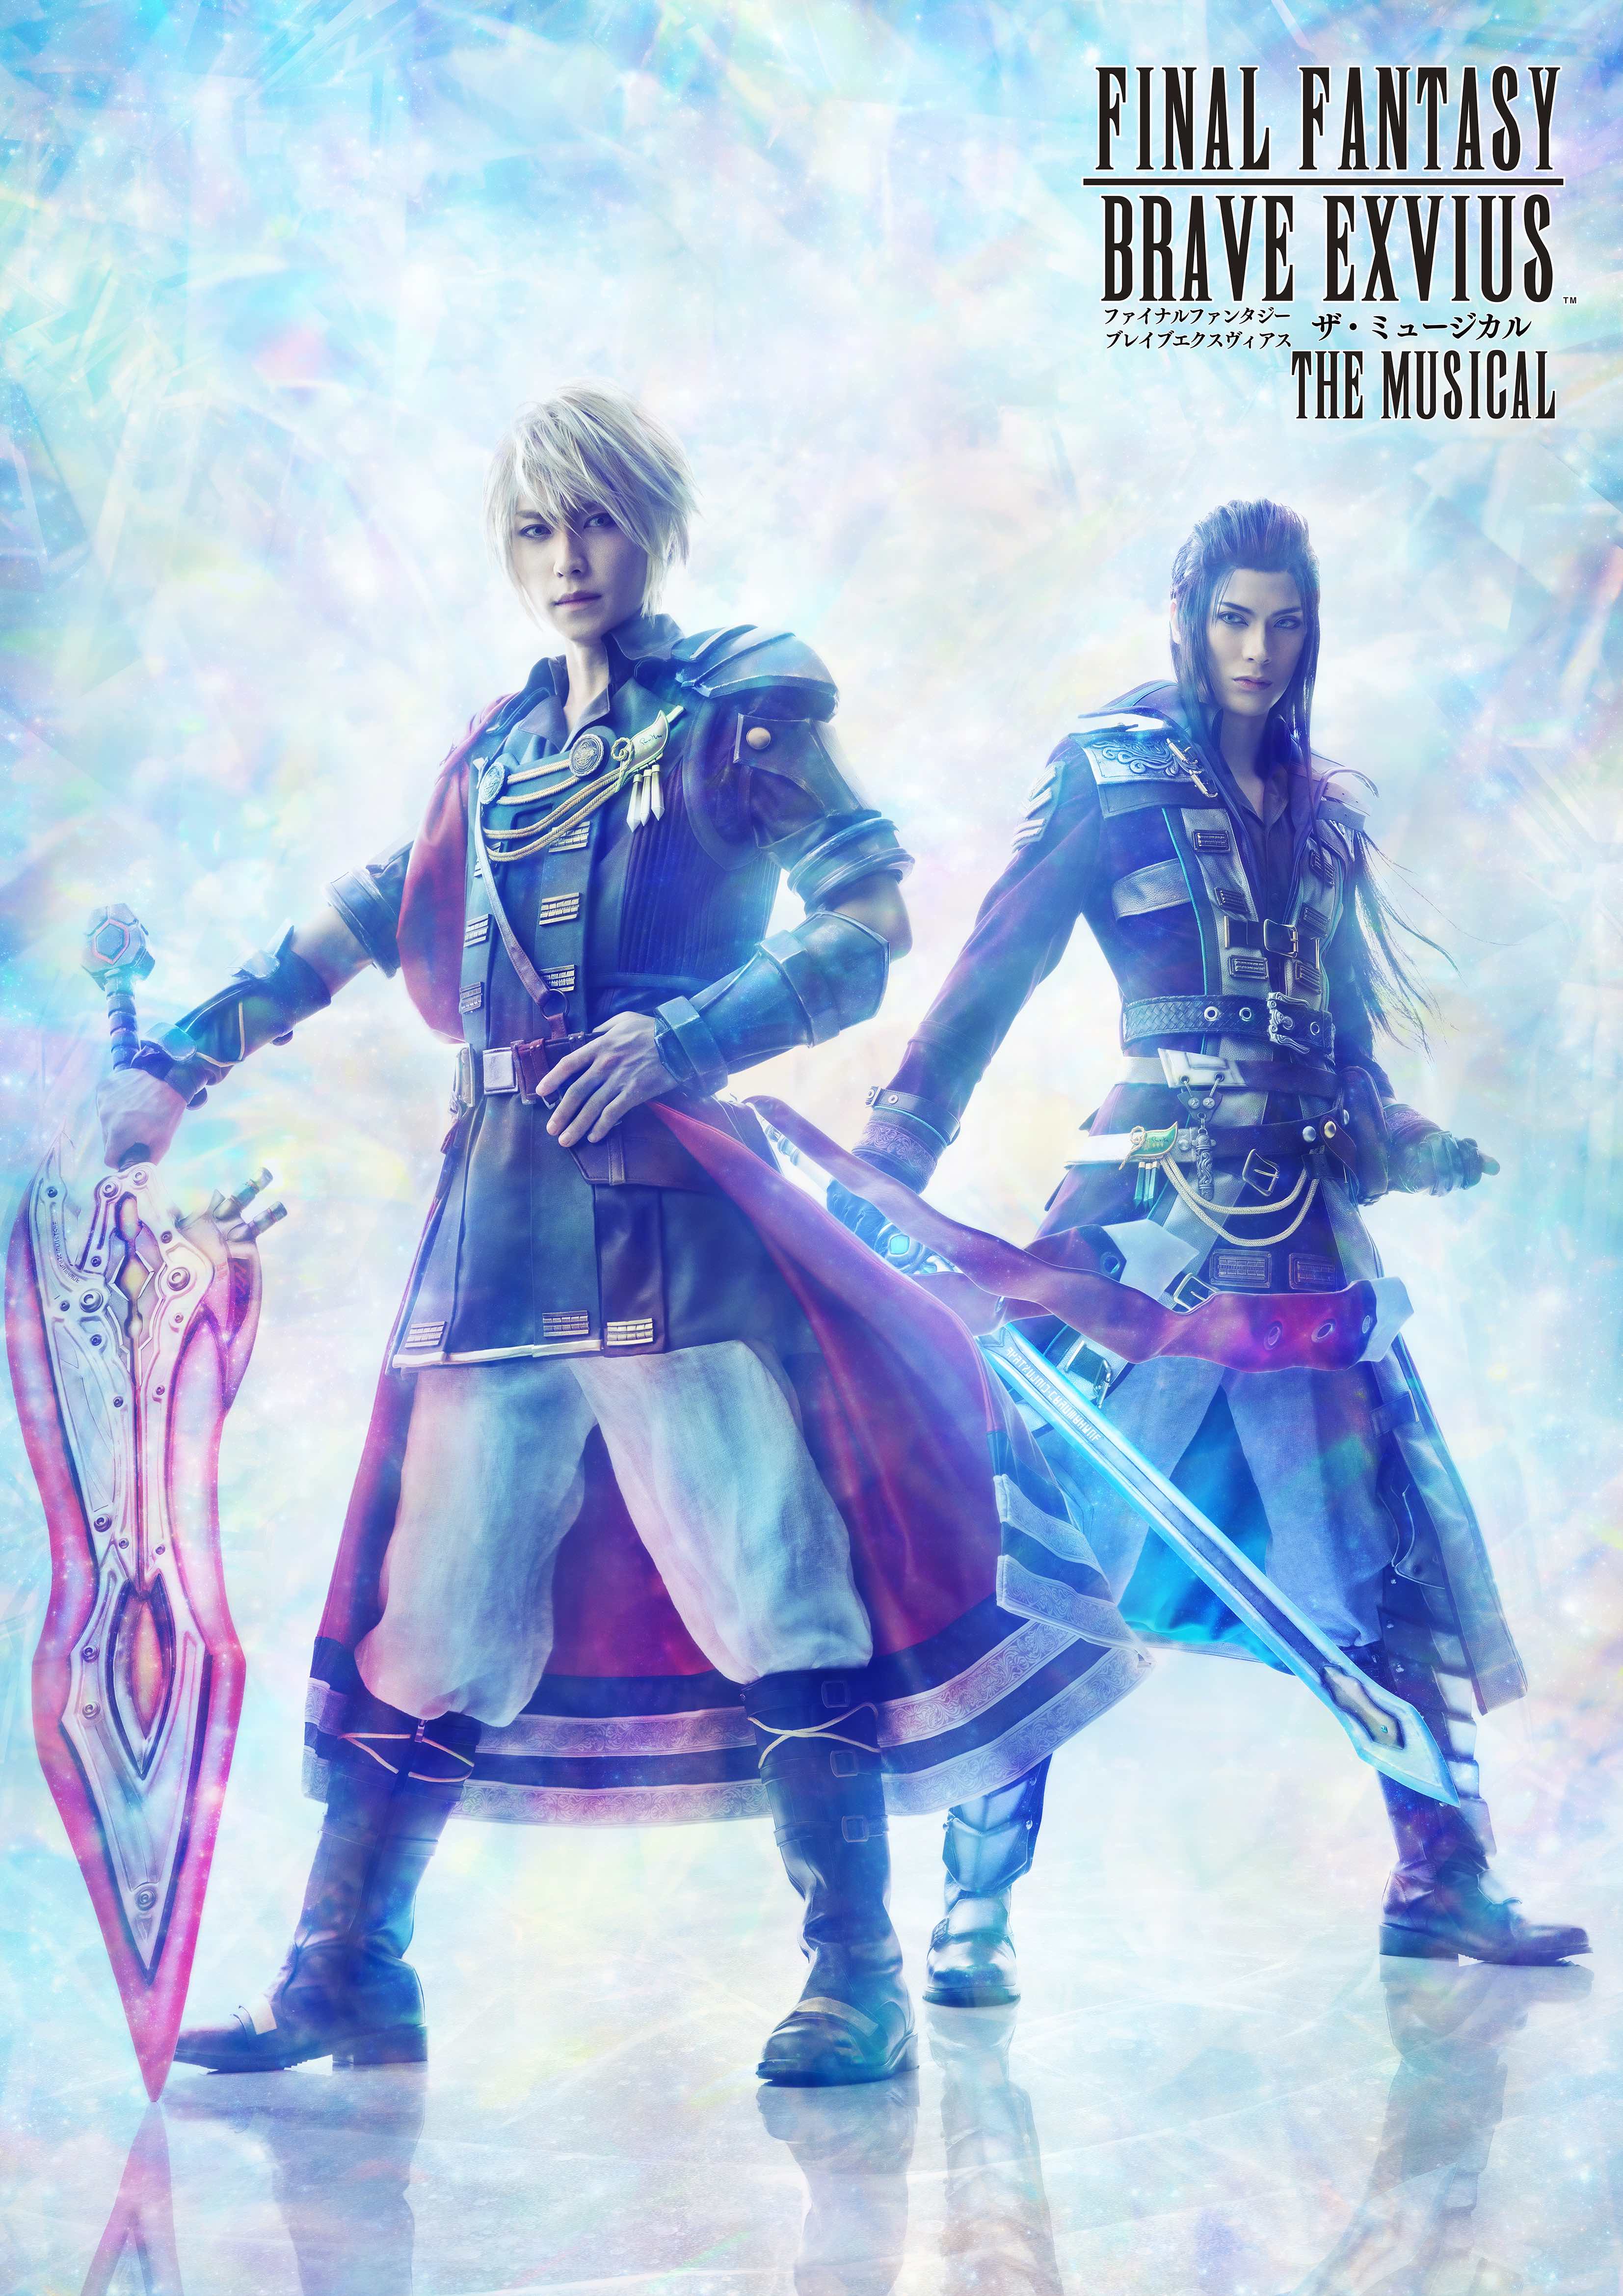 Final Fantasy Brave Exvius The Musical全キャスト決定 さらに第一弾ビジュアルを解禁 株式会社キョードーメディアスのプレスリリース